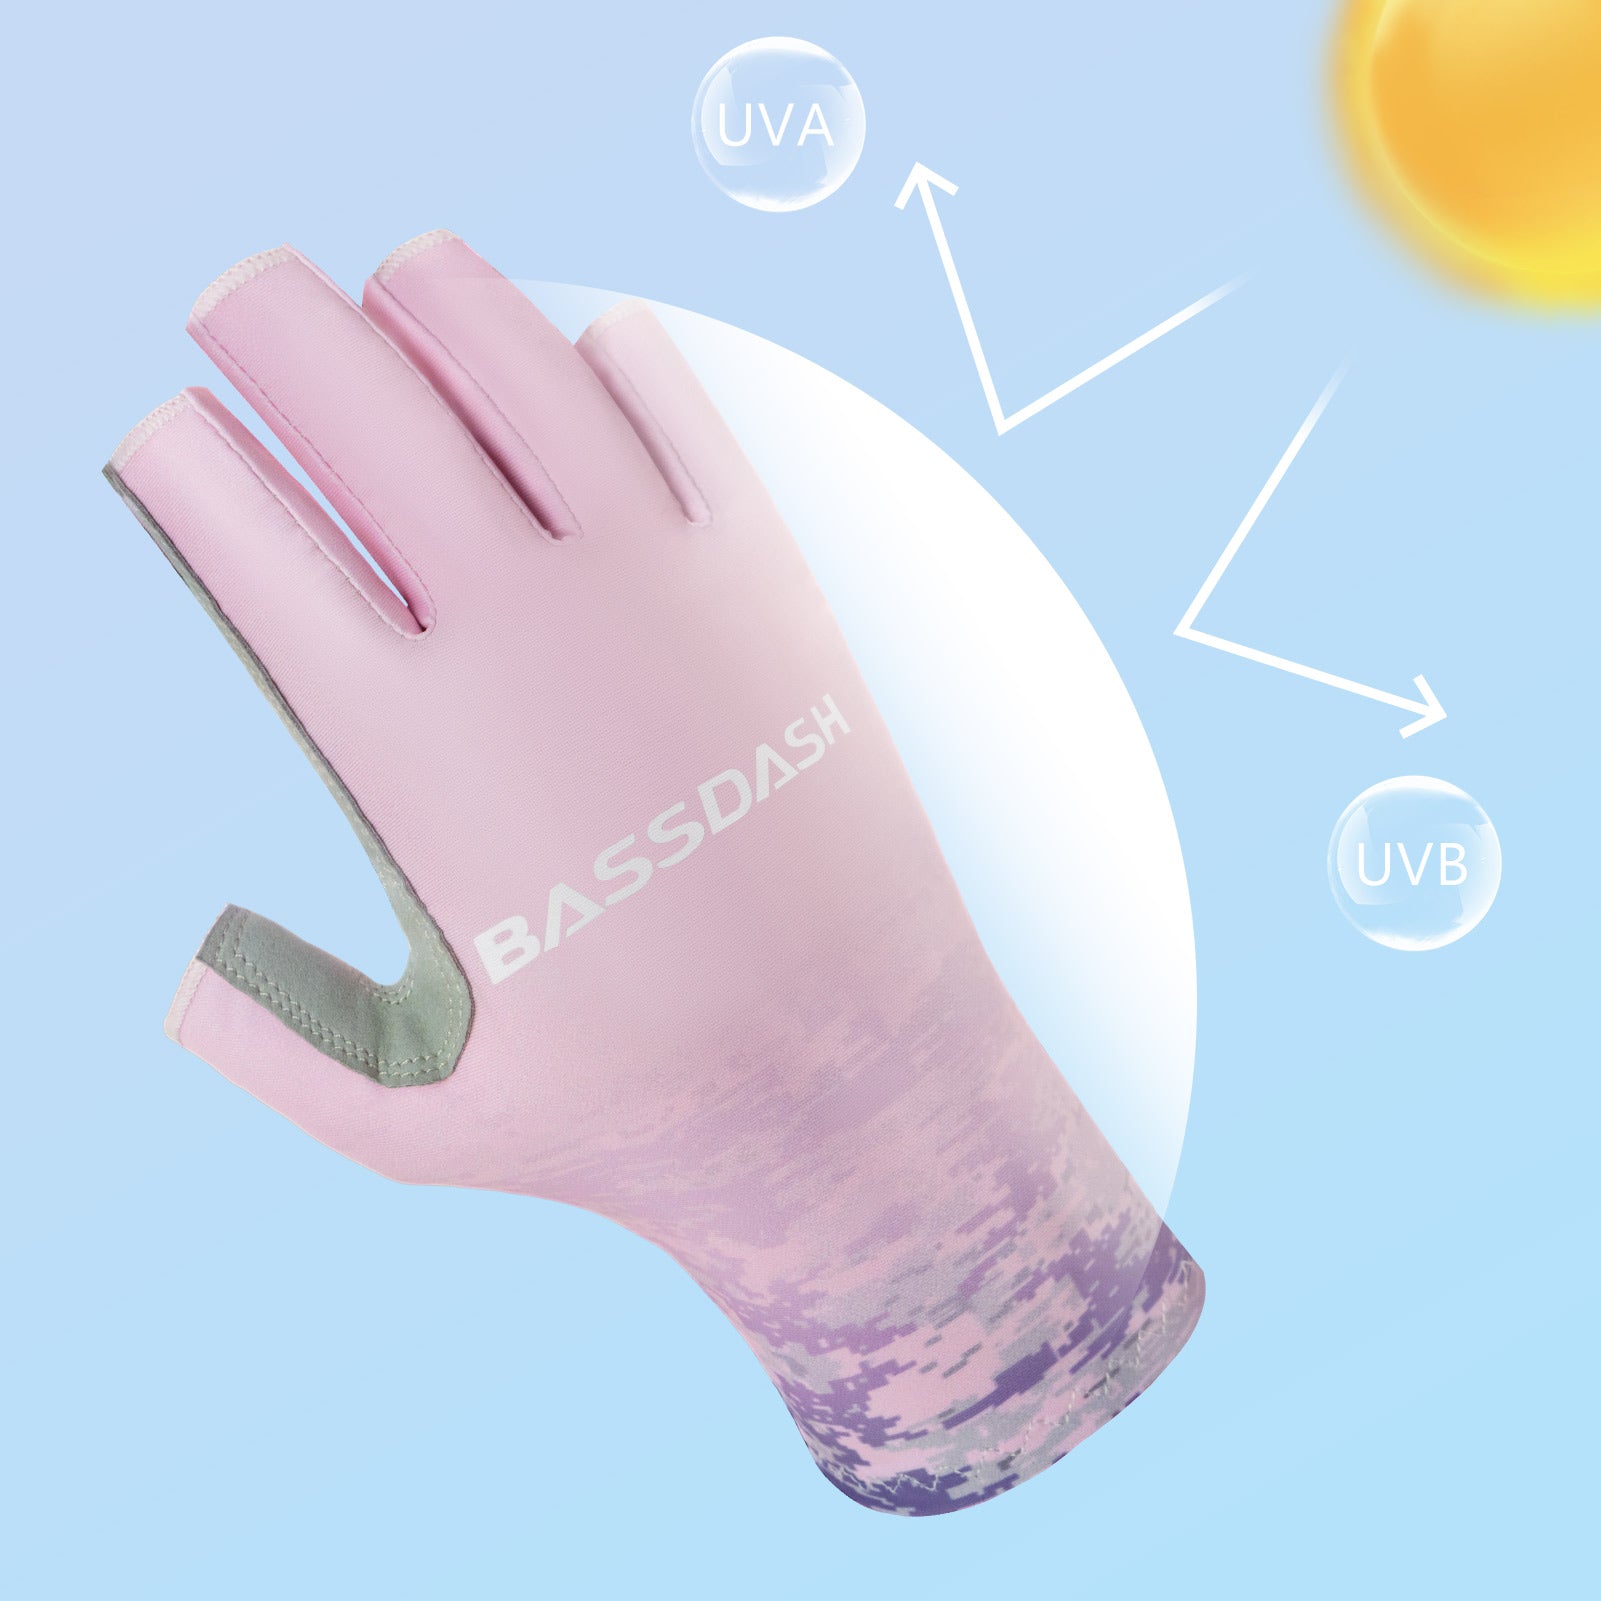 Bassdash ALTIMATE Sun Protection Fingerless Fishing Gloves UPF 50+